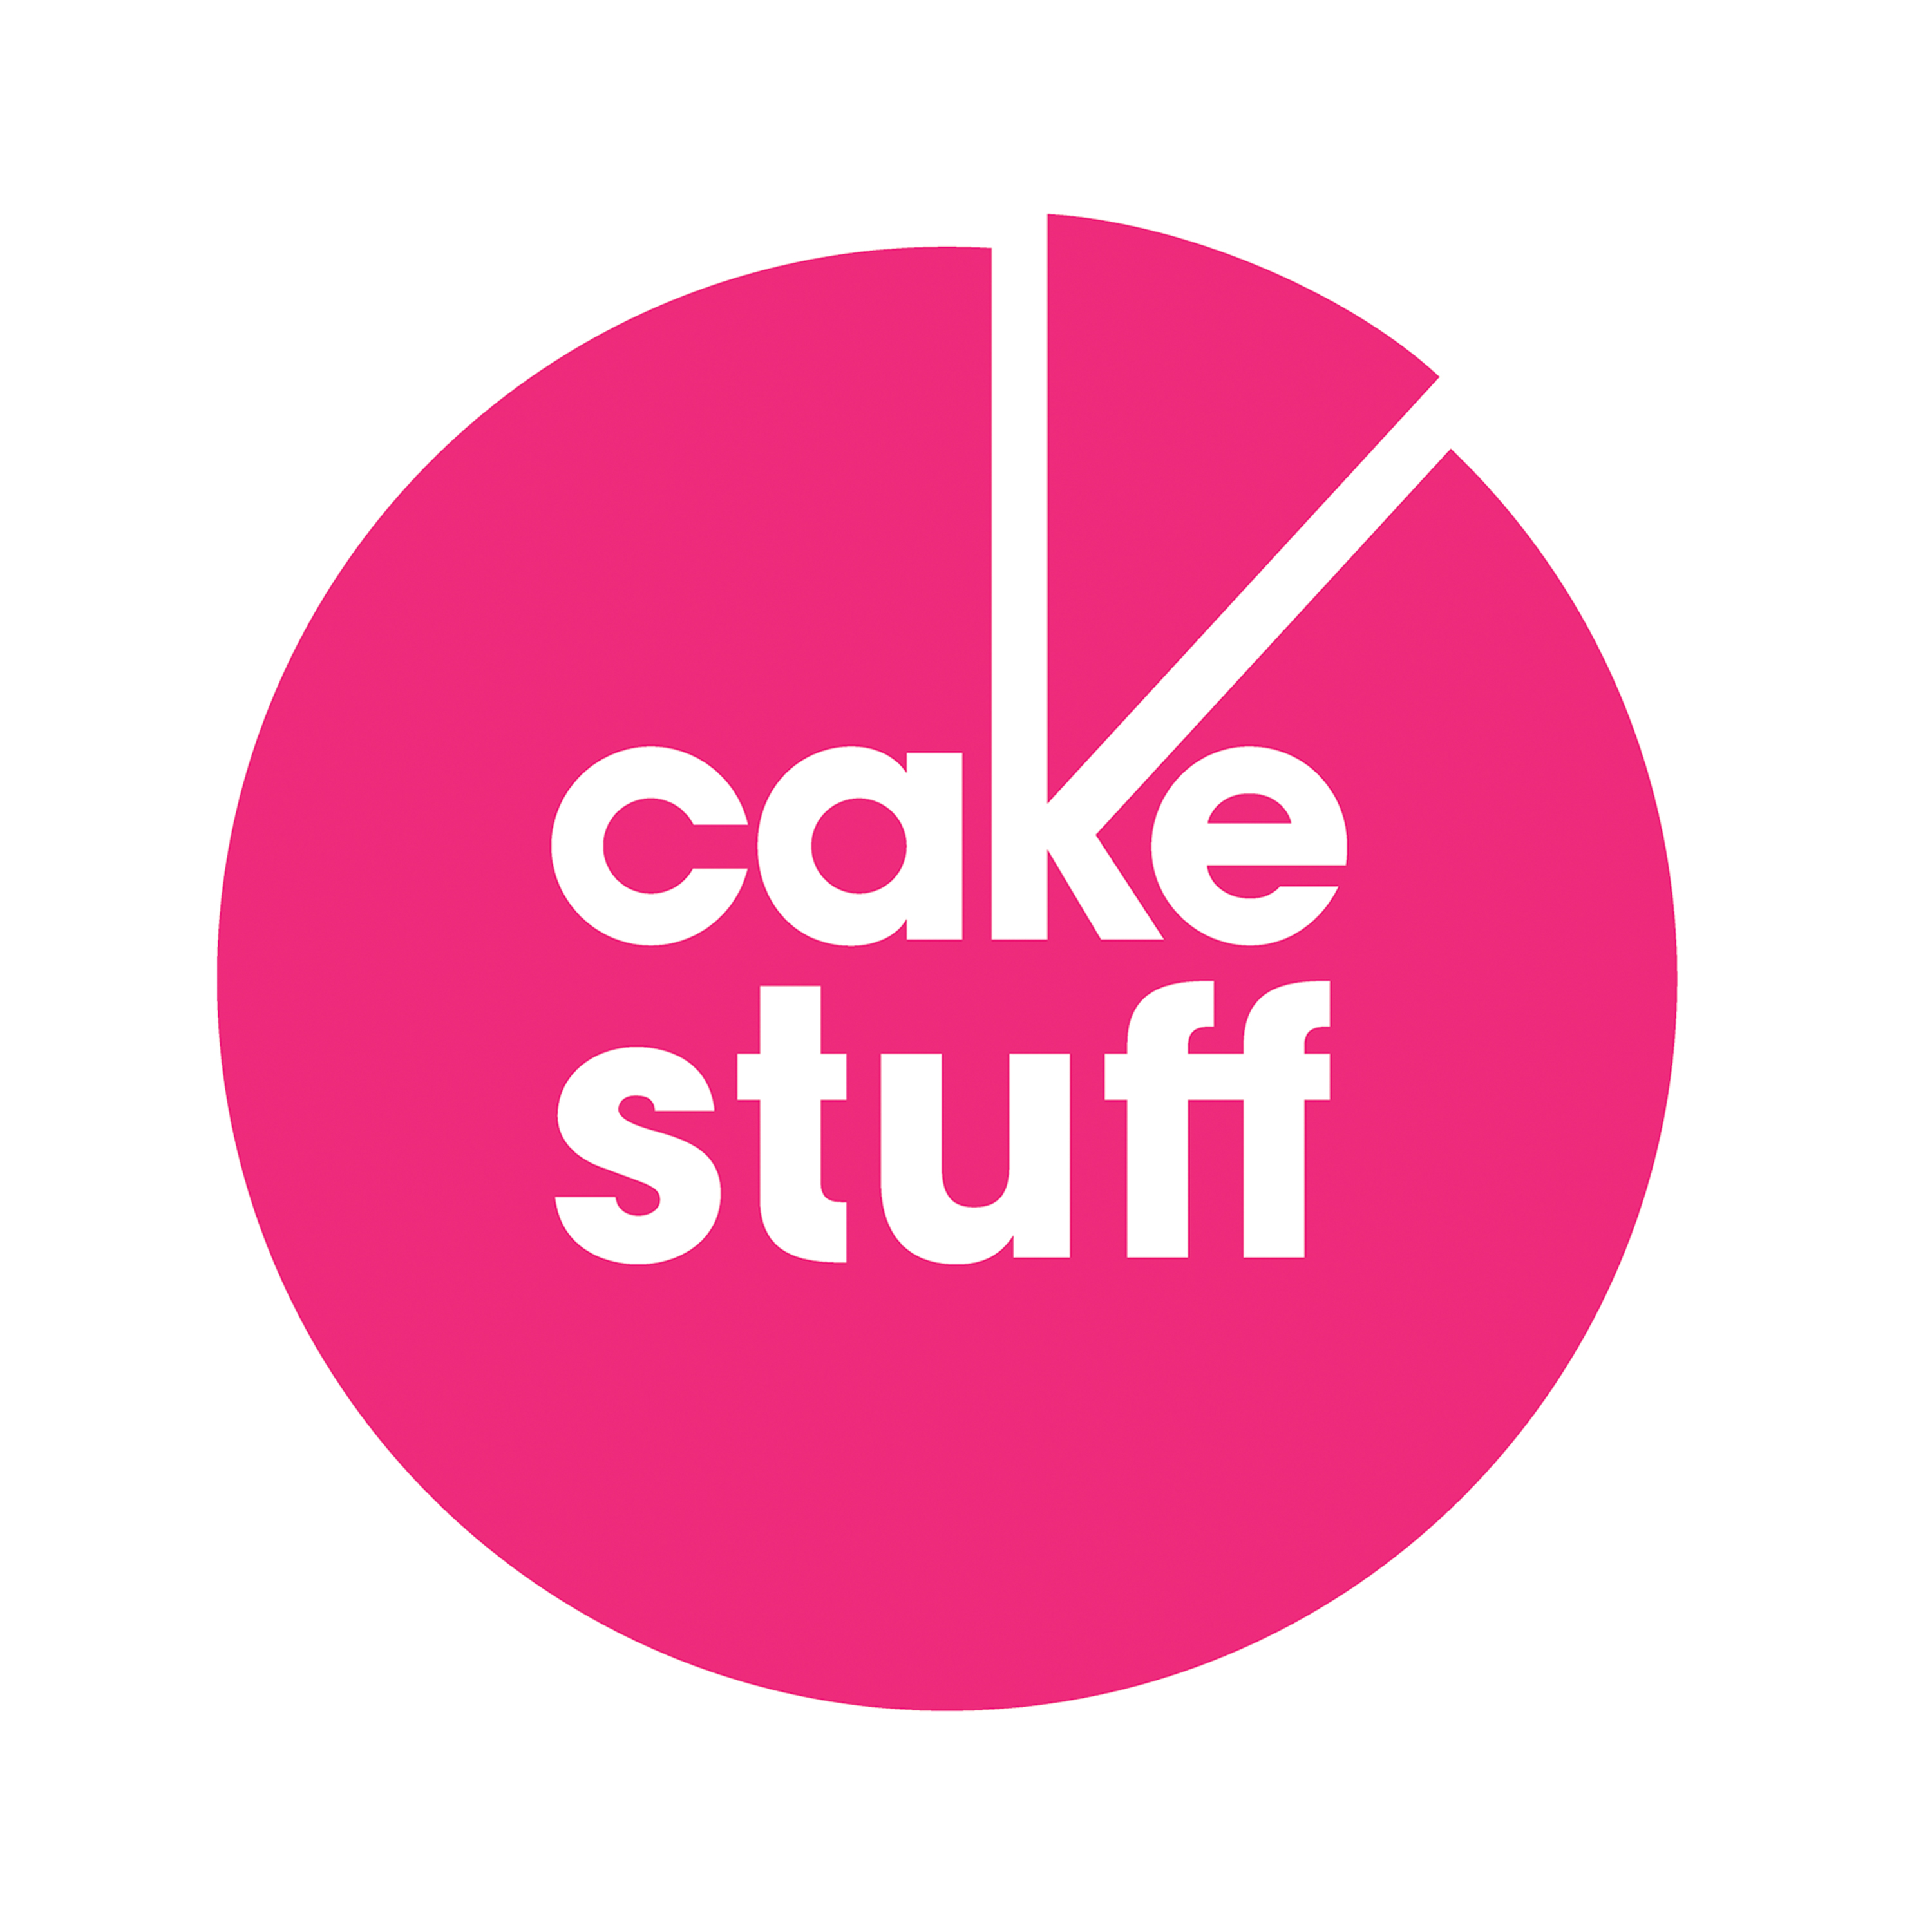 Cake Stuff logo